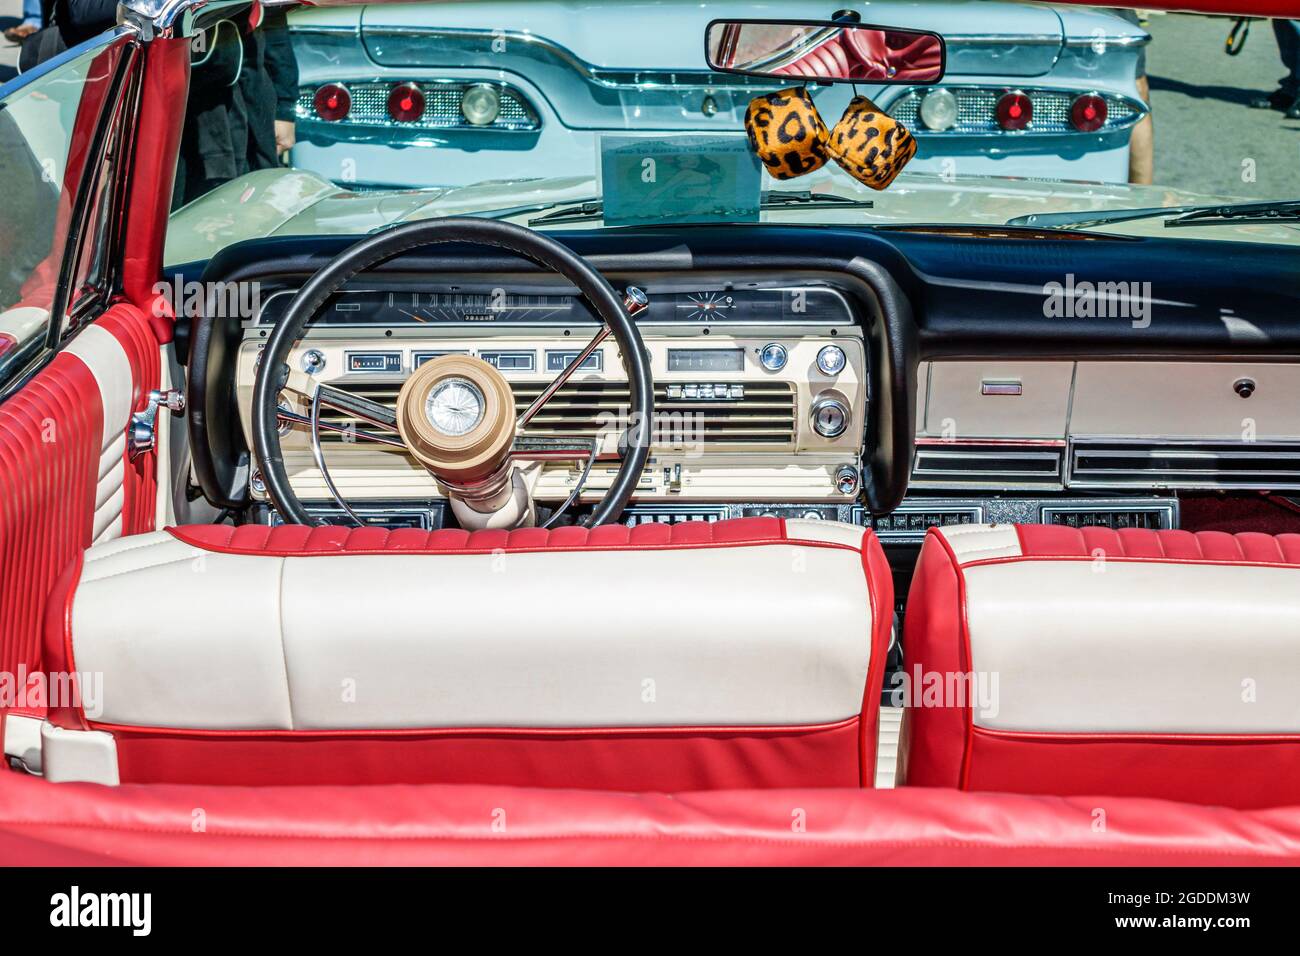 Miami Beach Florida, Ocean Drive, Art Deco Wochenende antike Oldtimer Automobil-Show, 1967 Ford Galaxie 500 Cabrio Innenraum Armaturenbrett Lenkung whe Stockfoto